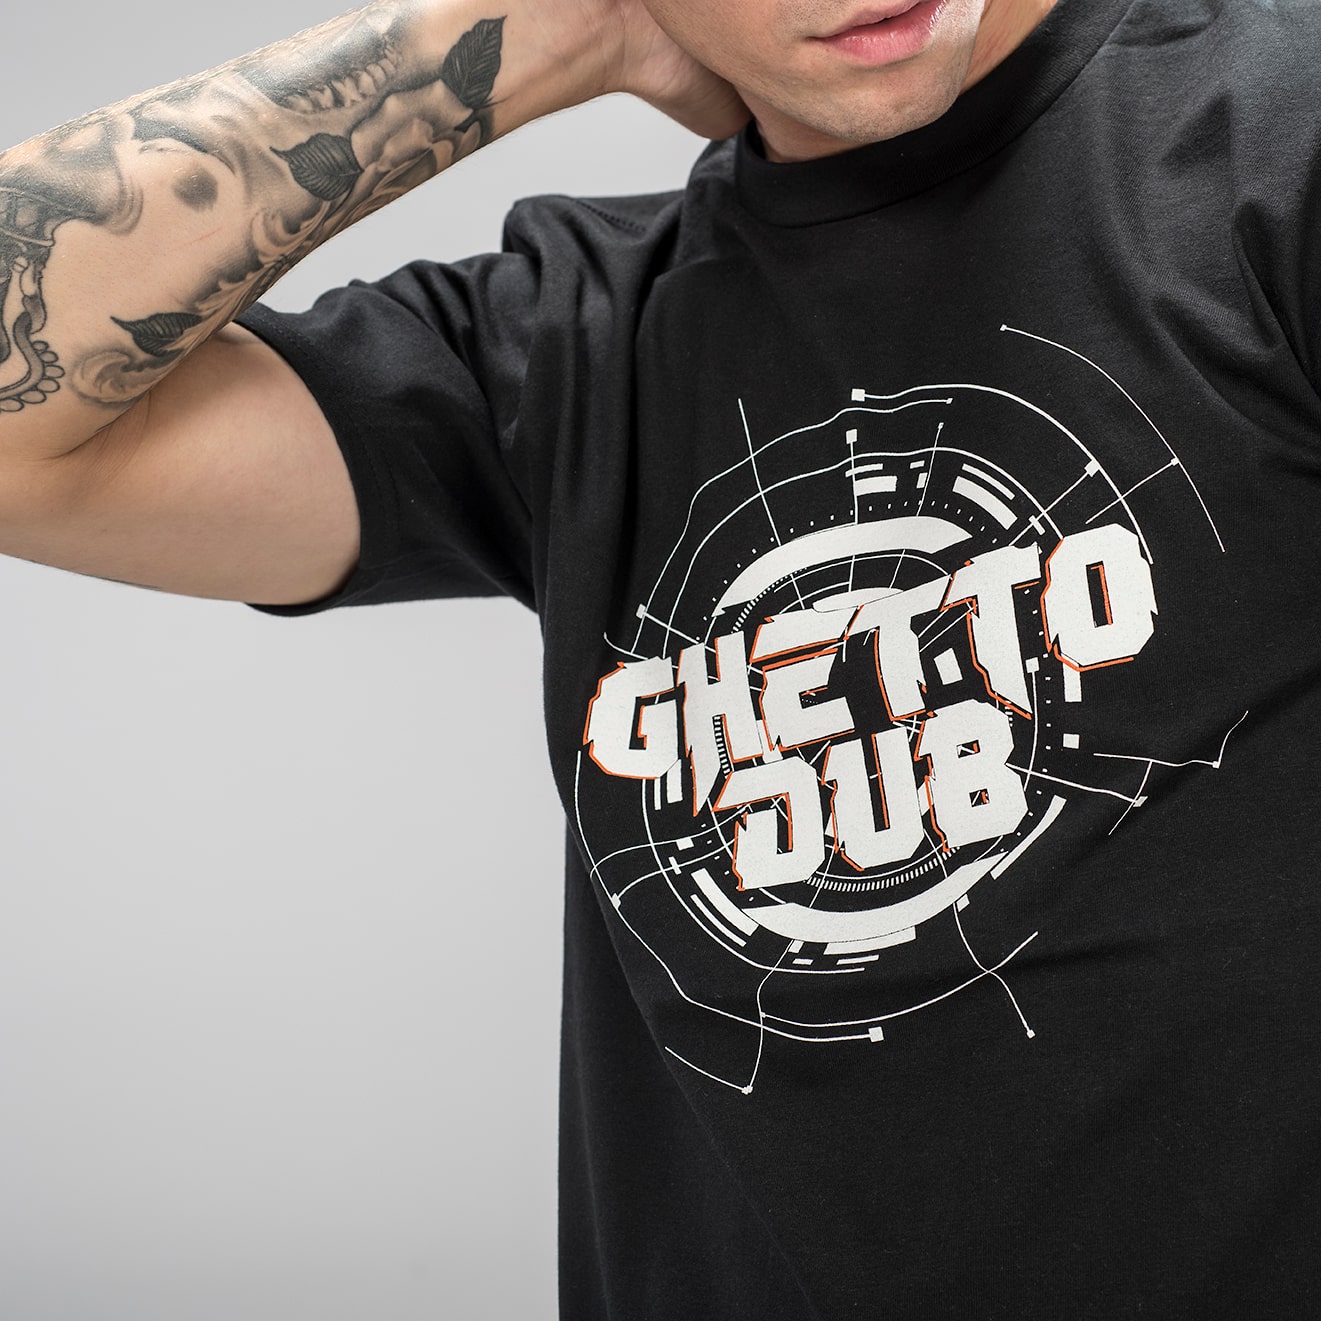 Ghetto Dub T-Shirt in Black on Model